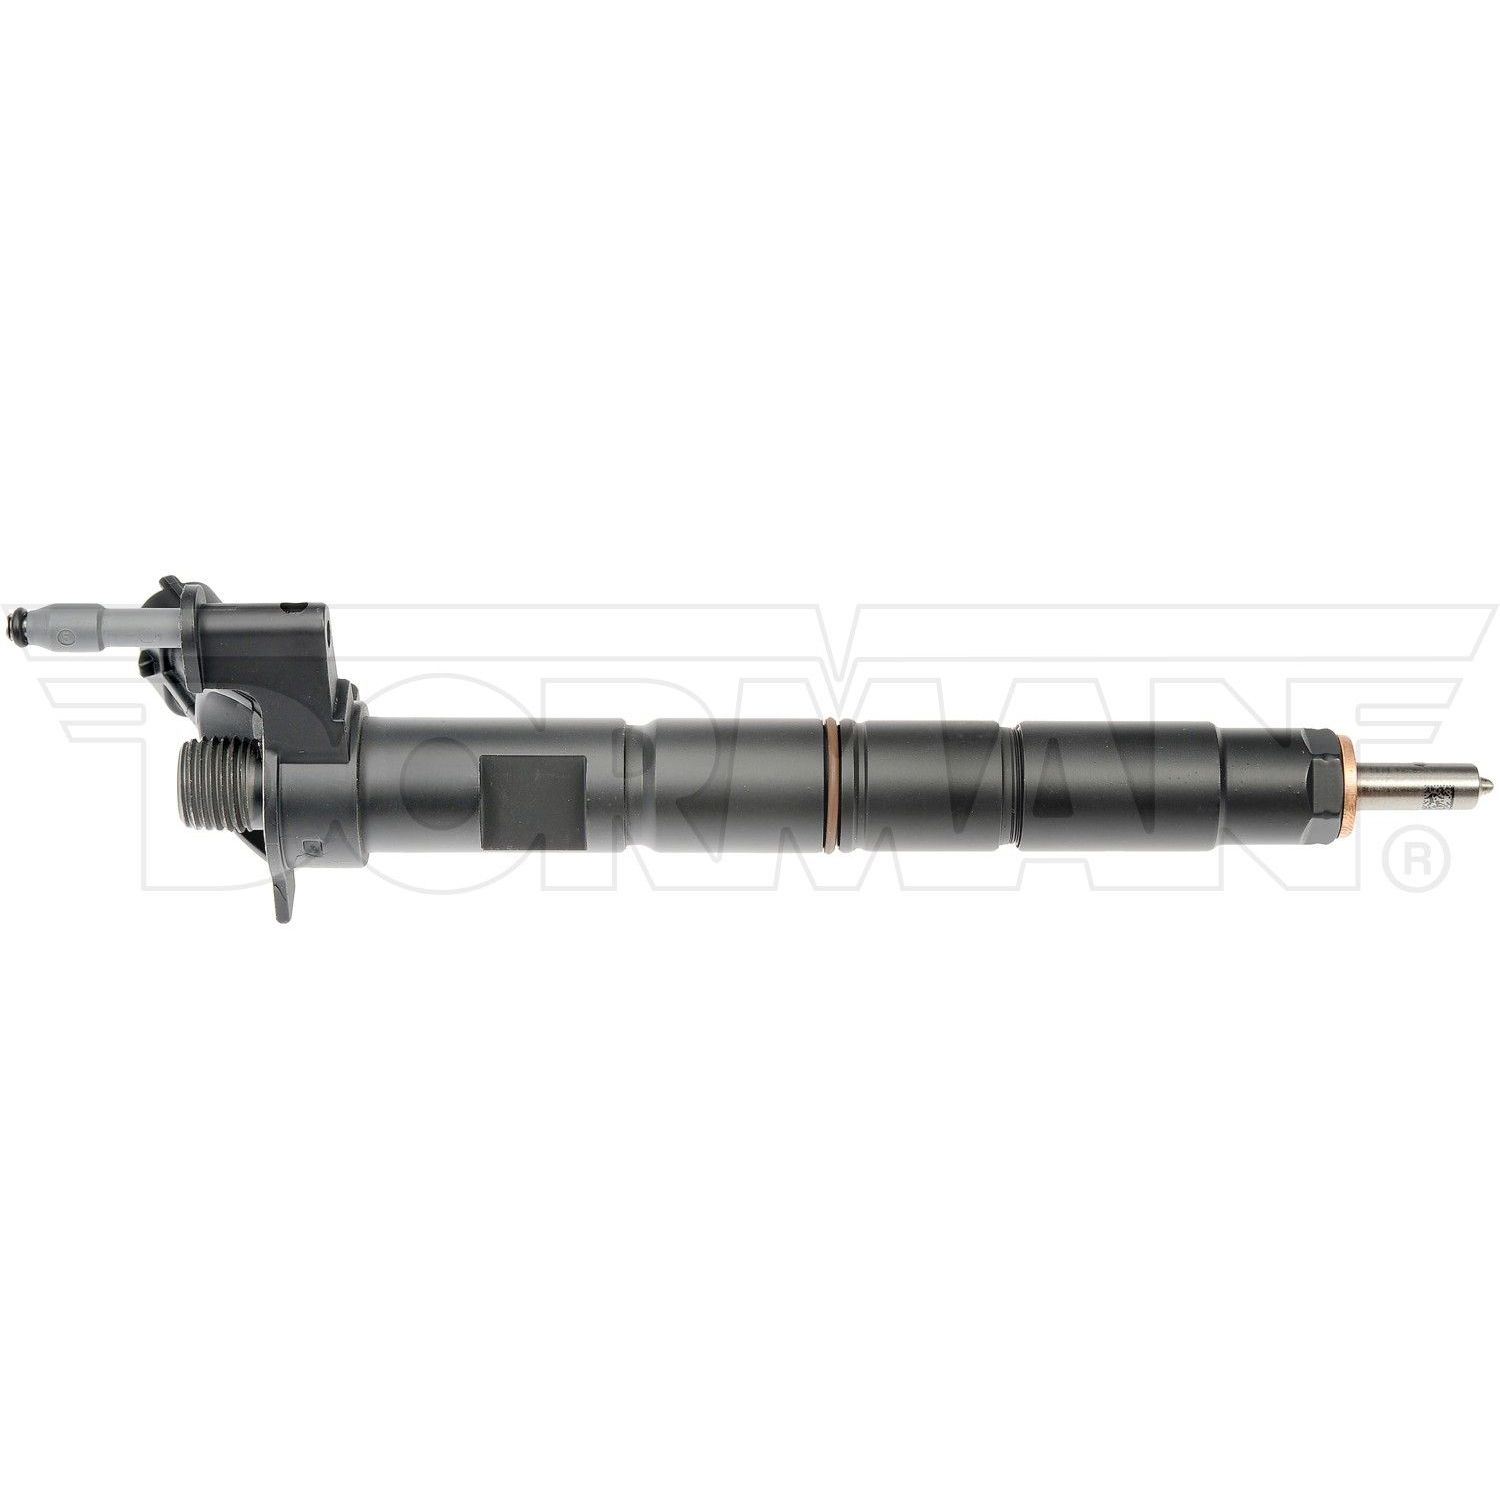 Dorman 502-518 Fuel Injector For Select 11-16 Chevrolet GMC Models  889245914361 eBay